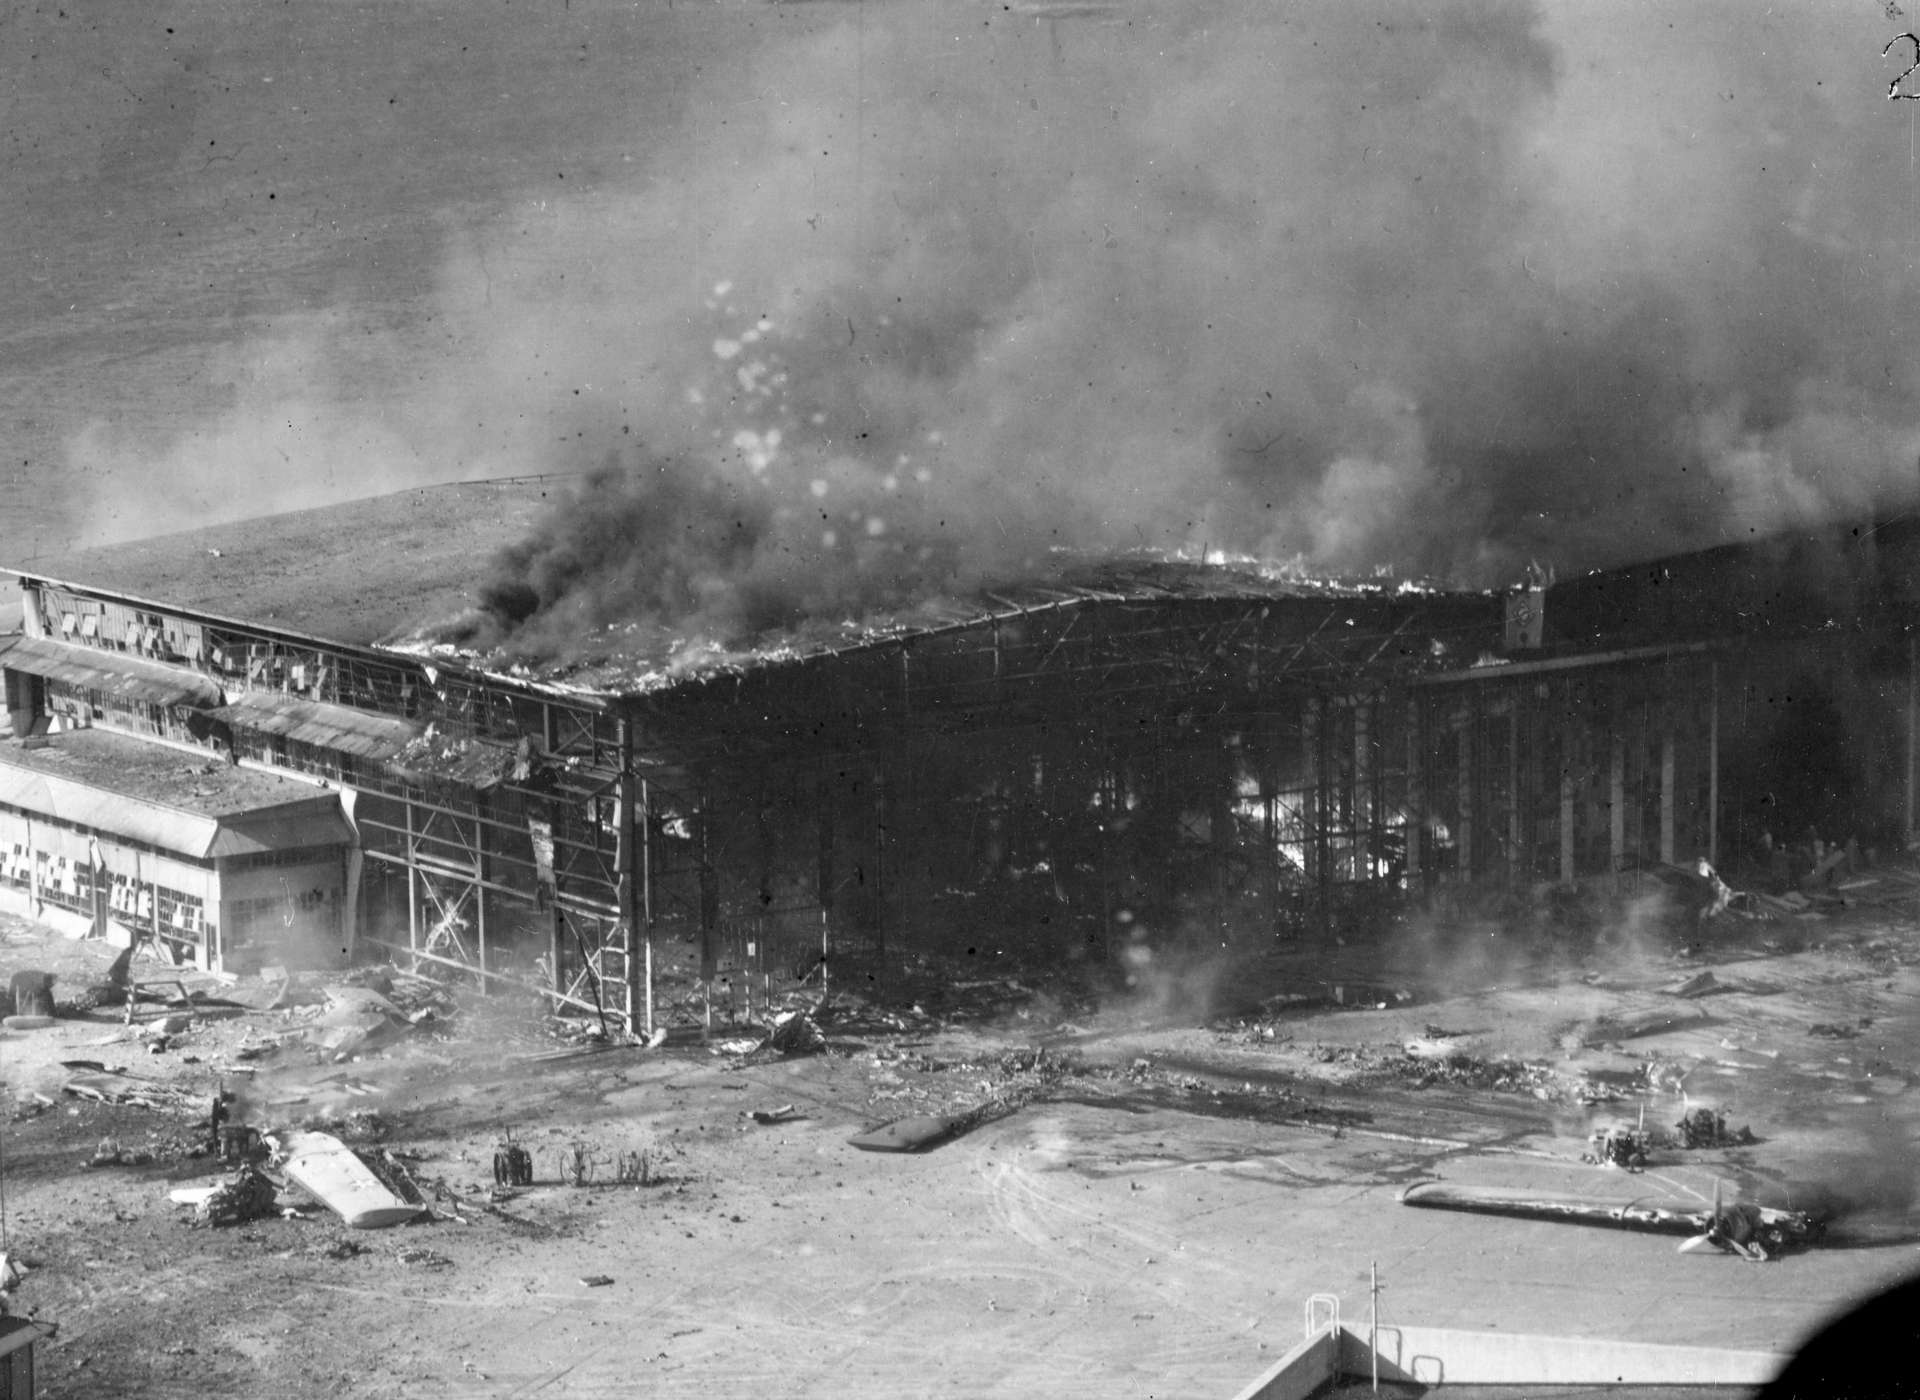 Infamy: December 7, 1941 traveling exhibit, photo of Pearl Harbor destruction